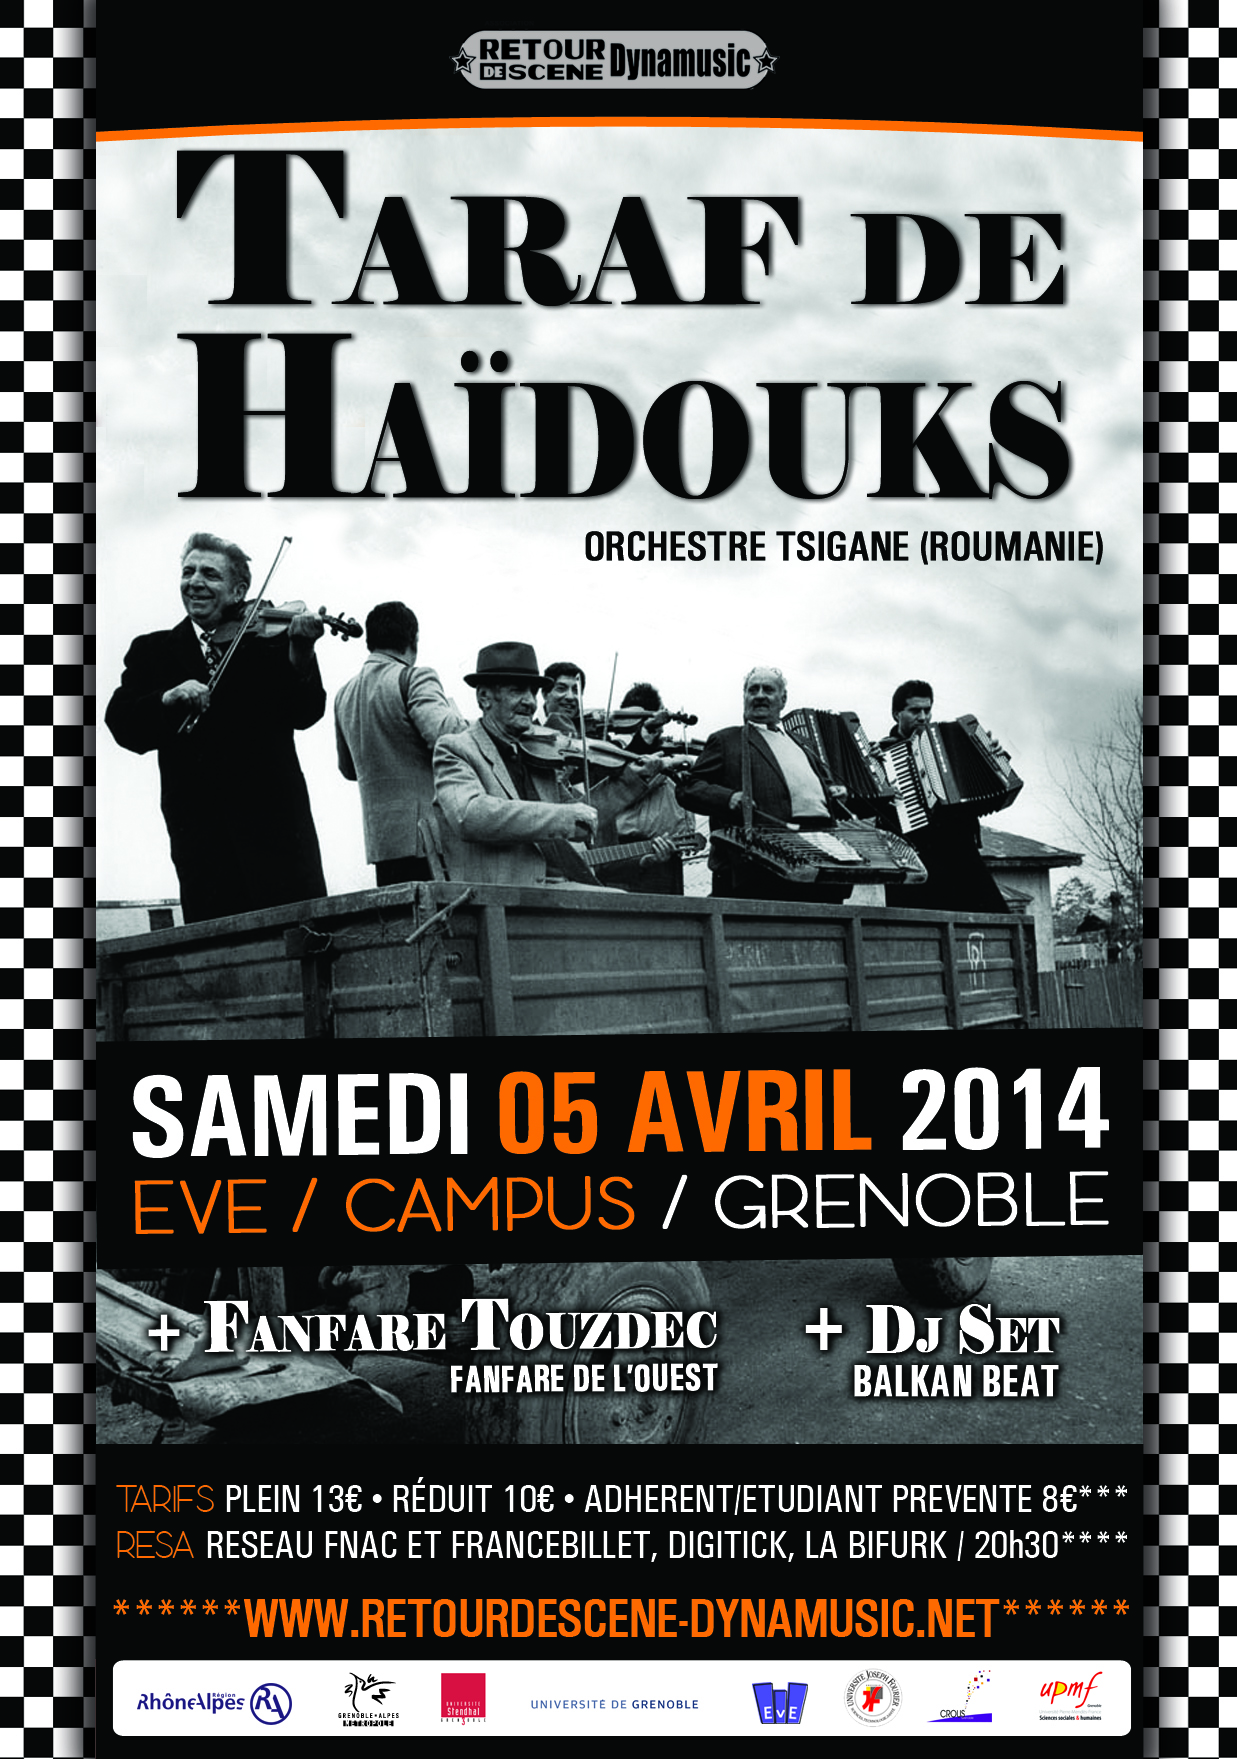 Taraf de Haïdoucks - EVE - 05/04/2014